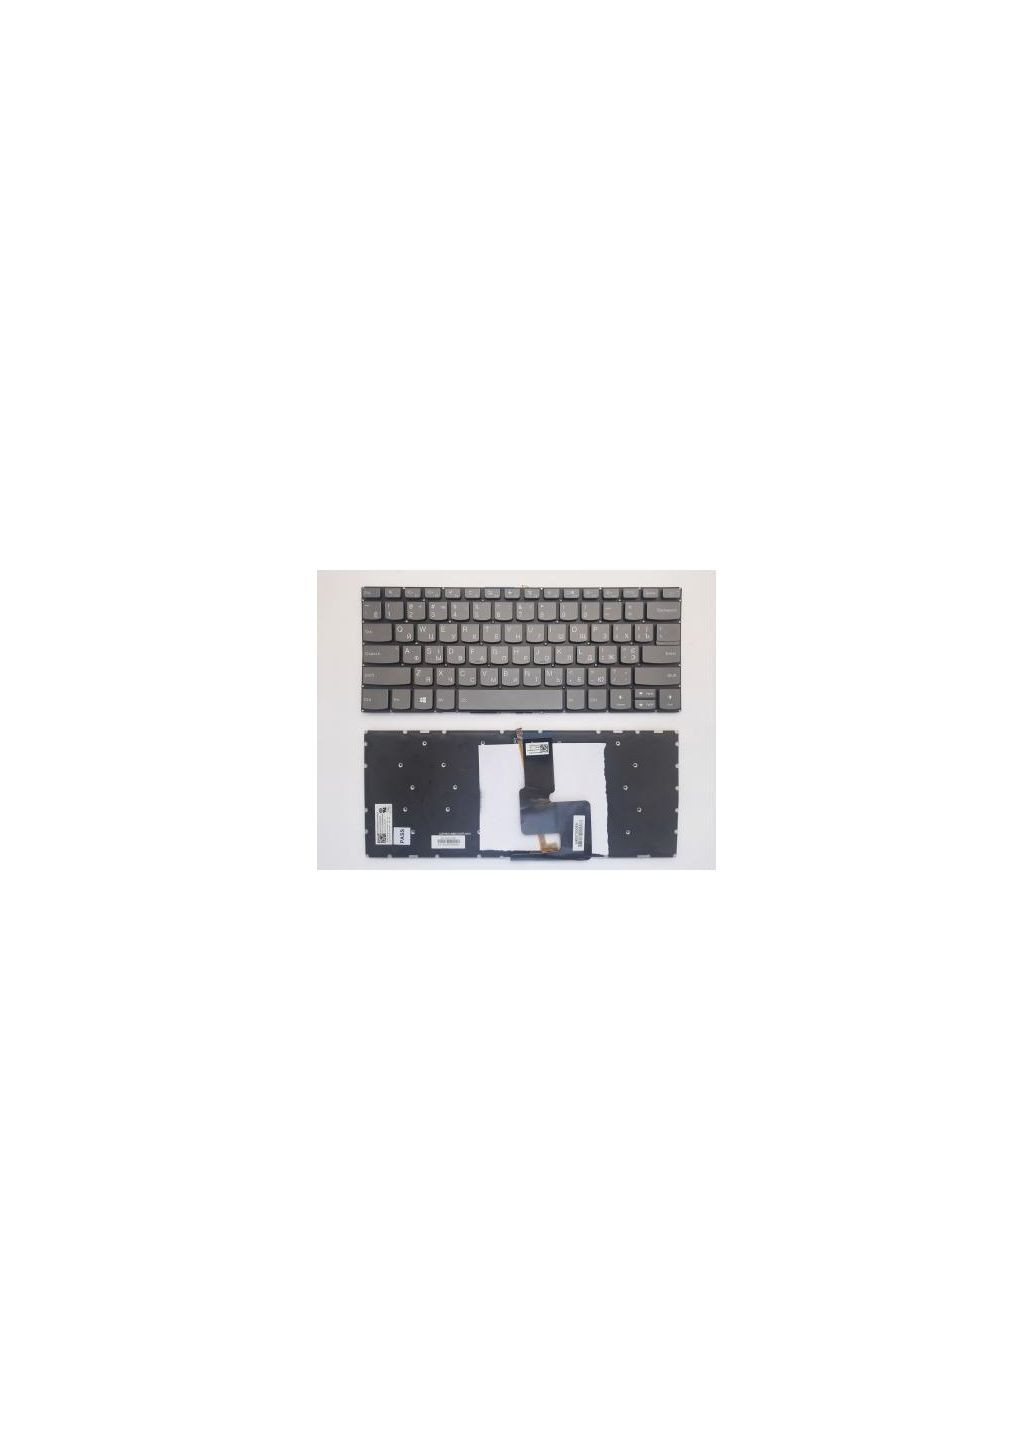 Клавиатура ноутбука IdeaPad 32014ISK,320S-14IKB/14IBR серая подсветка UA (A46117) Lenovo ideapad 320-14isk, 320s-14ikb/14ibr серая с подсв u (276707966)